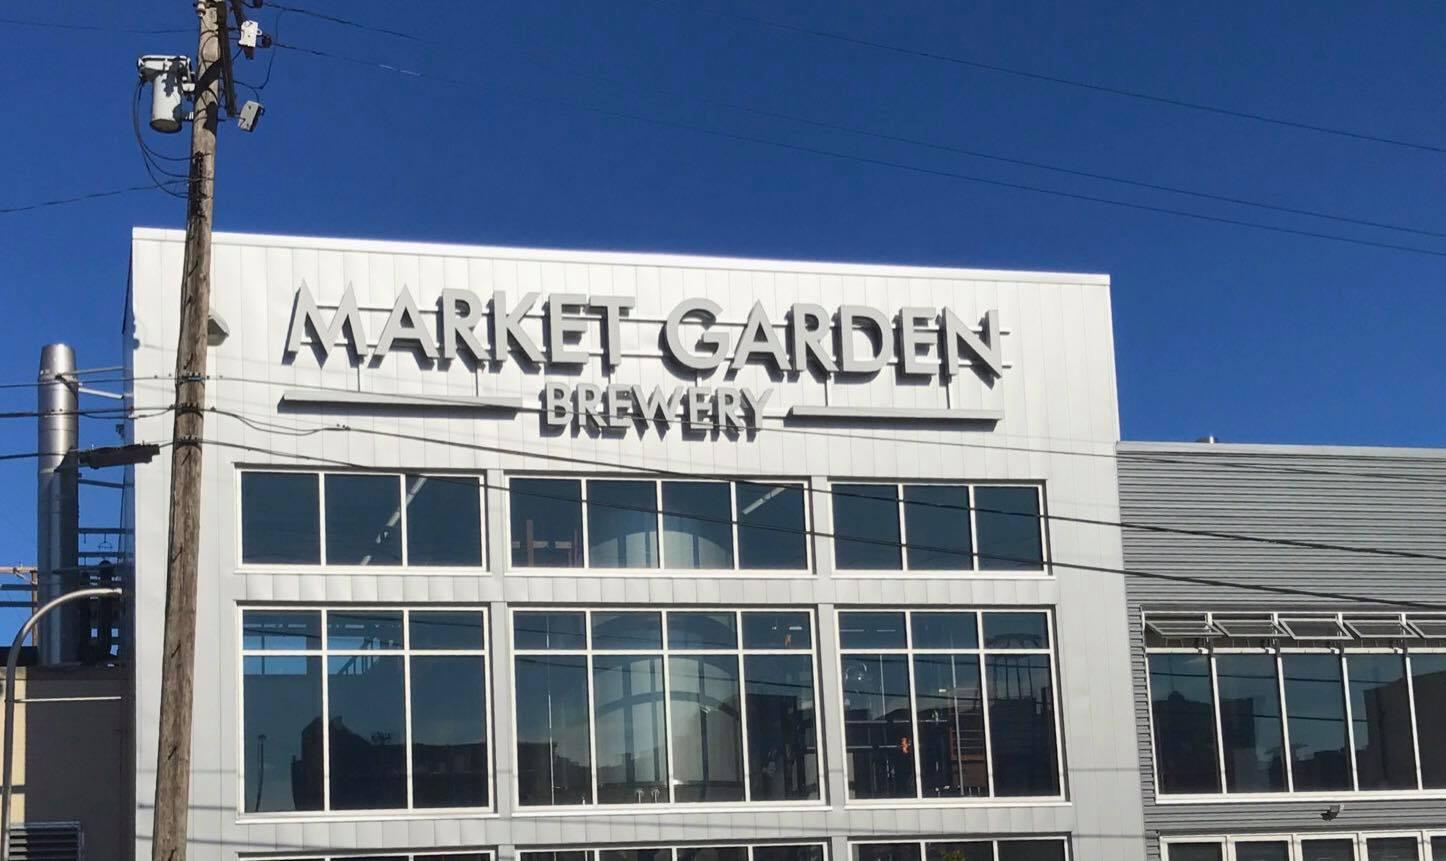 Pet Friendly Market Garden Brewery